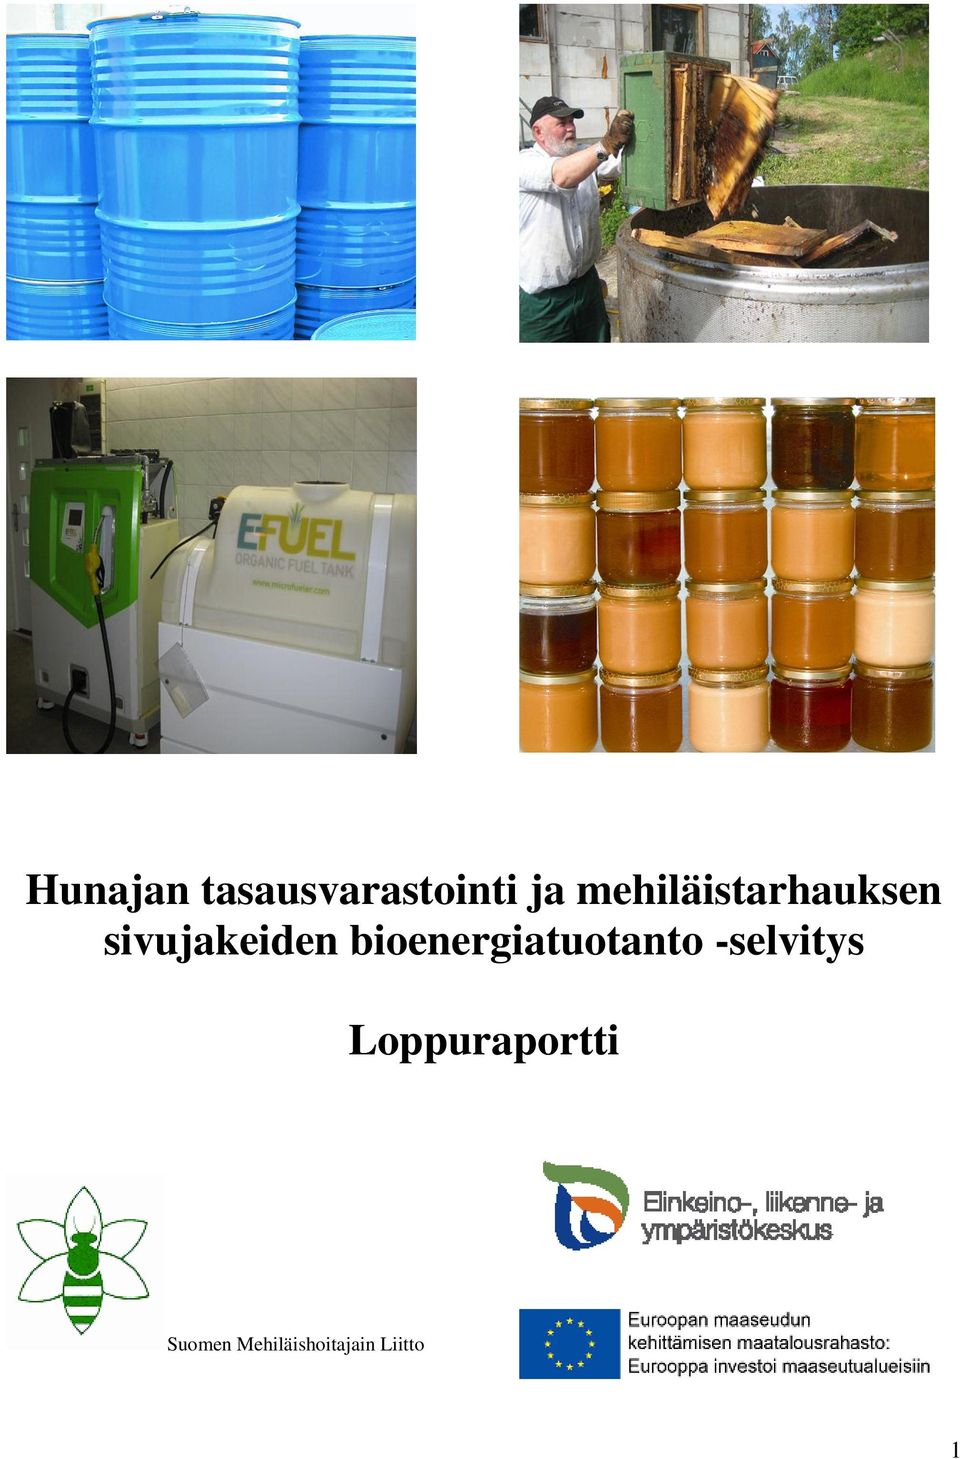 bioenergiatuotanto -selvitys